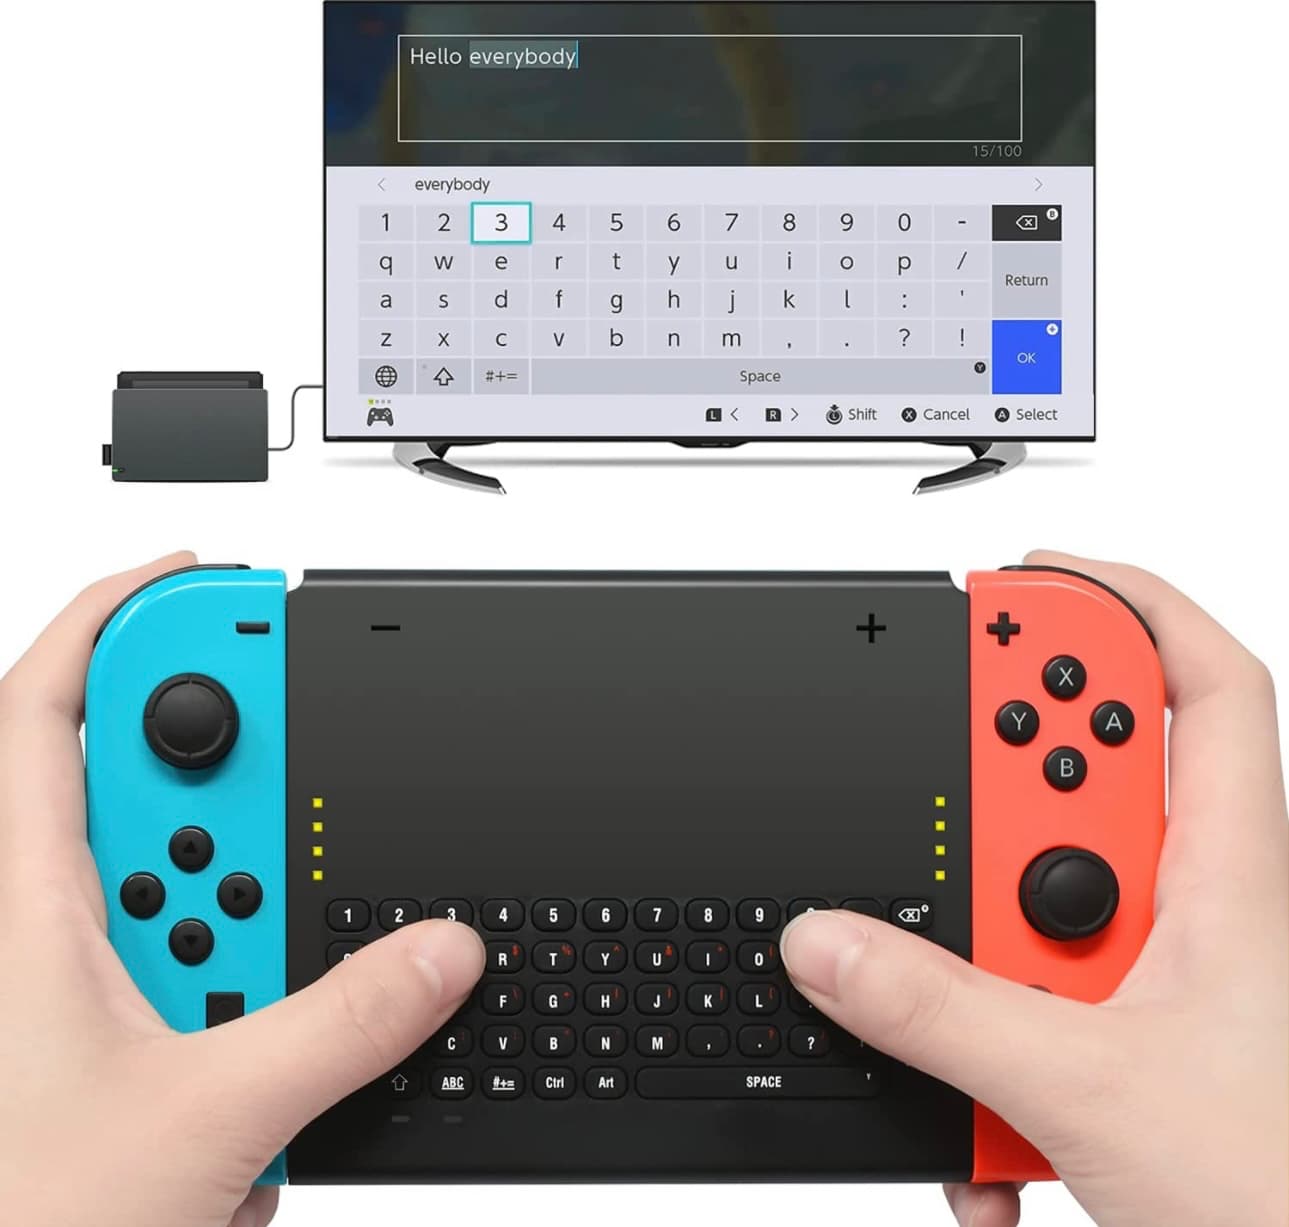 Wireless keyboard for Nintendo Switch Joy-Con controllers.